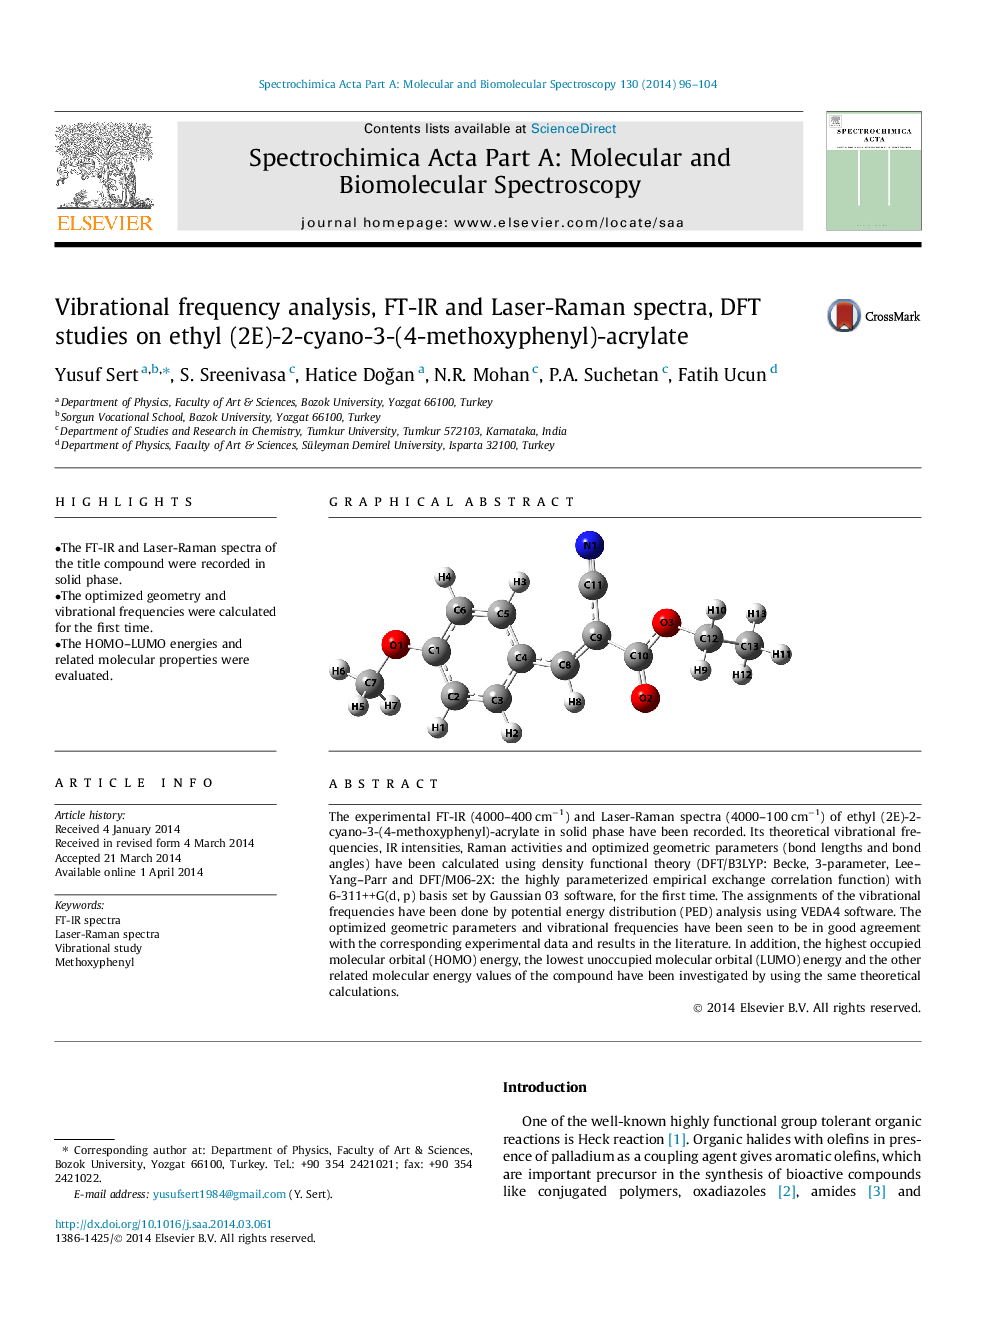 Vibrational frequency analysis, FT-IR and Laser-Raman spectra, DFT studies on ethyl (2E)-2-cyano-3-(4-methoxyphenyl)-acrylate